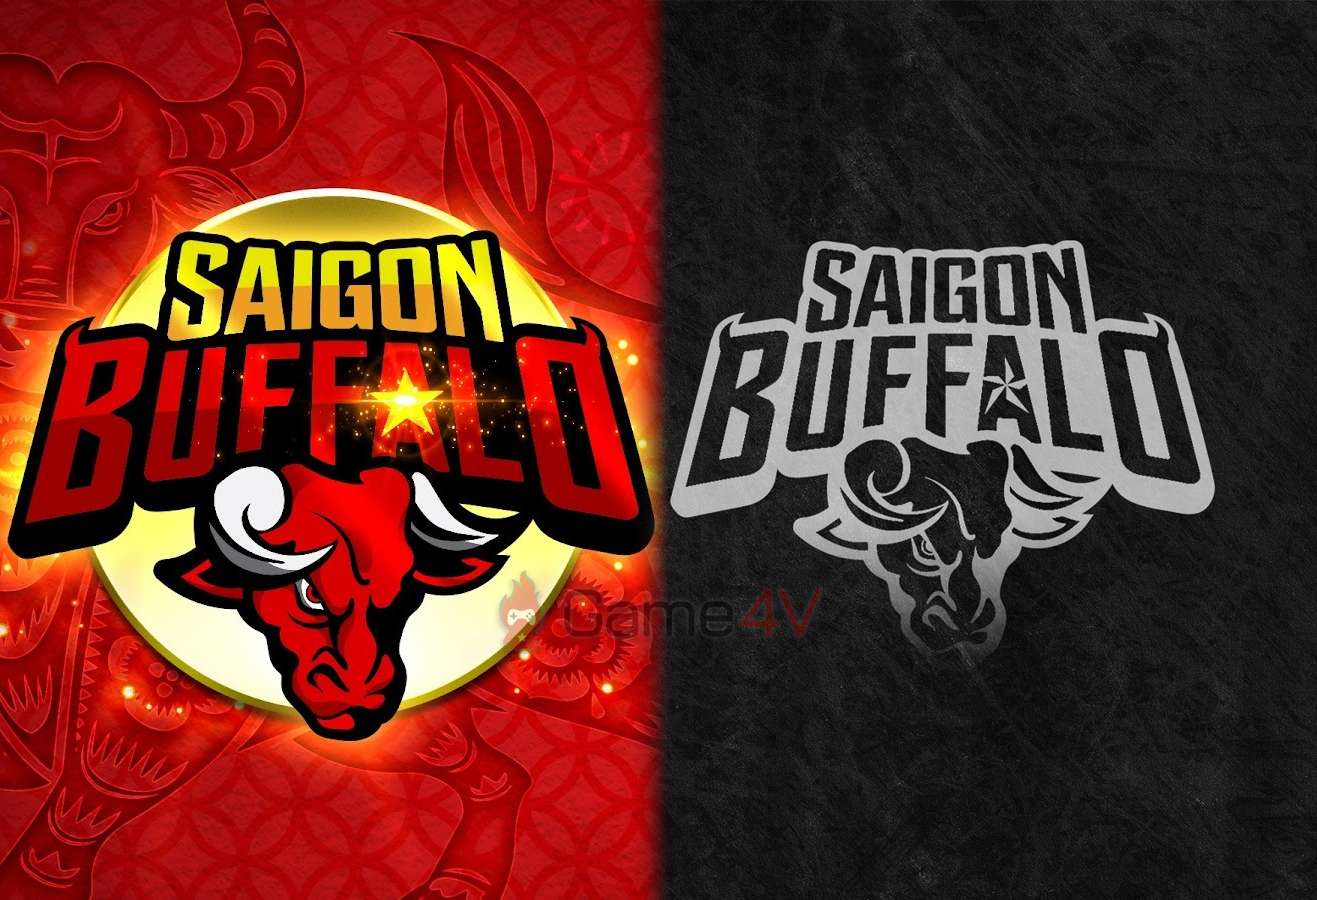 Saigon Buffalo confirms the unsuccessful contract signing with CNJ Esports, the ‘Buffalo’ brand comeback VCS